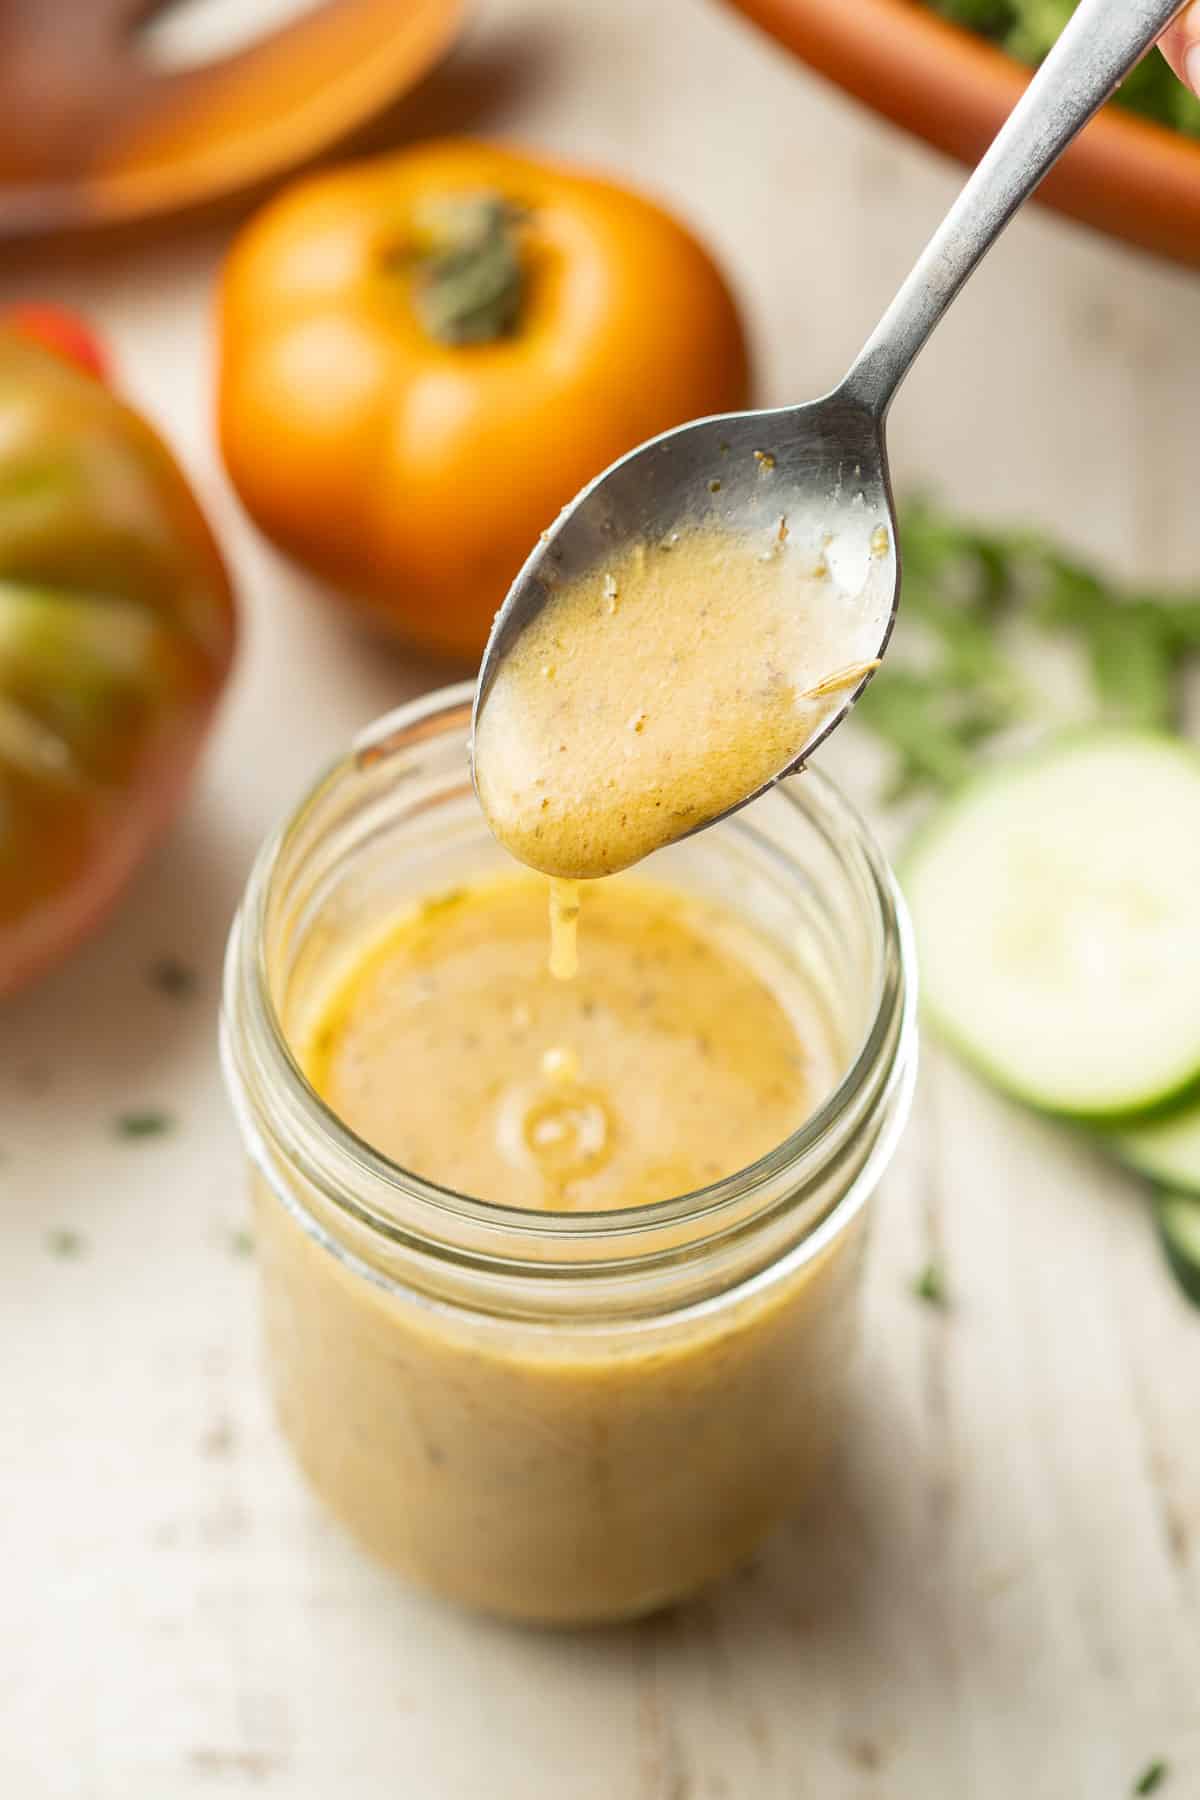 Spoon drizzling Vegan Italian Dressing into a jar.